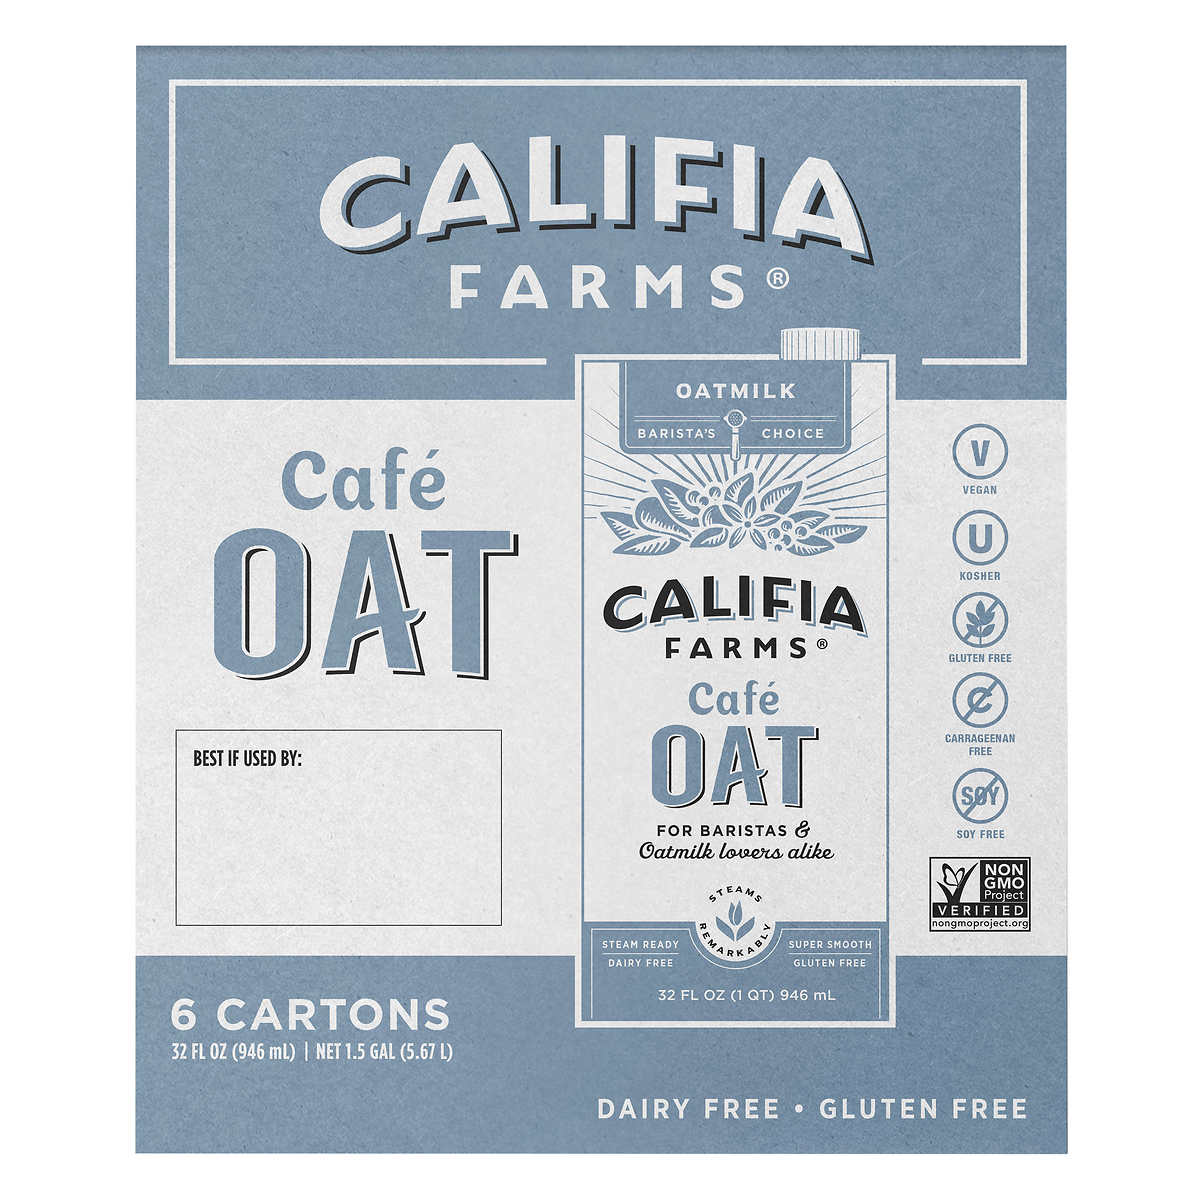 Califia Farms Cafe Oat Barista Choice Oatmilk, Dairy Free, 32 oz, 6-count